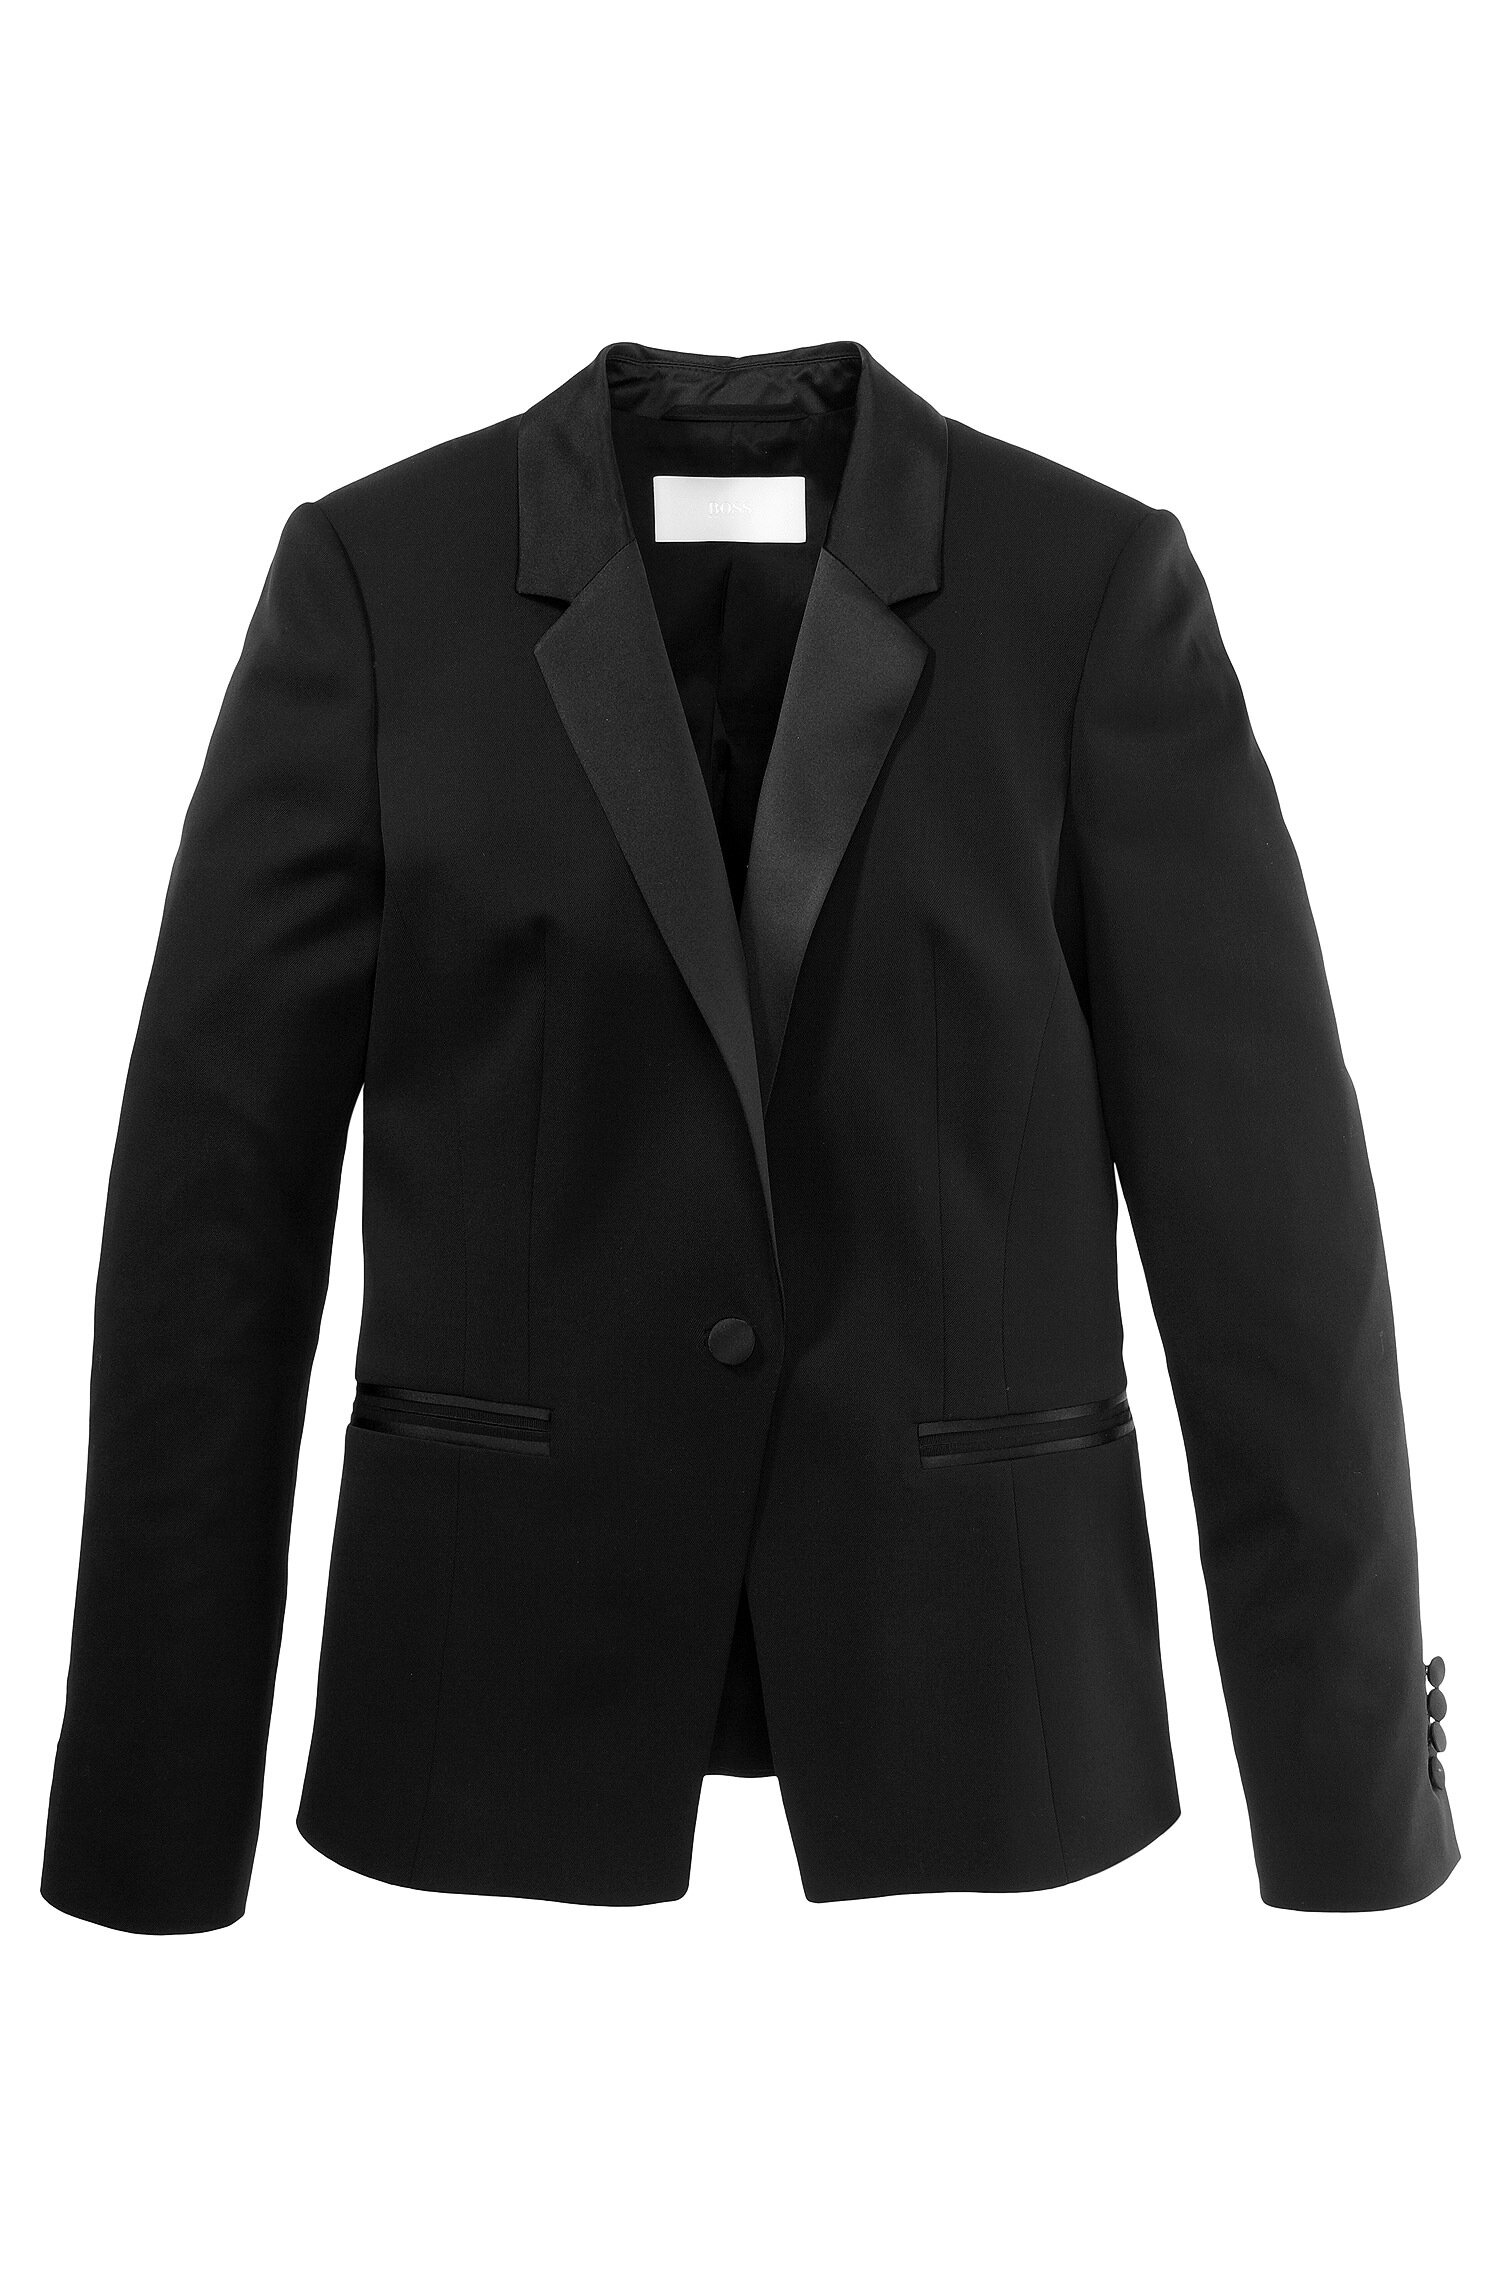 boss-black-jawona-stretch-virgin-wool-blazer-with-satin-and-grosgrain-trim-product-1-27068175-2-562402576-normal.jpeg